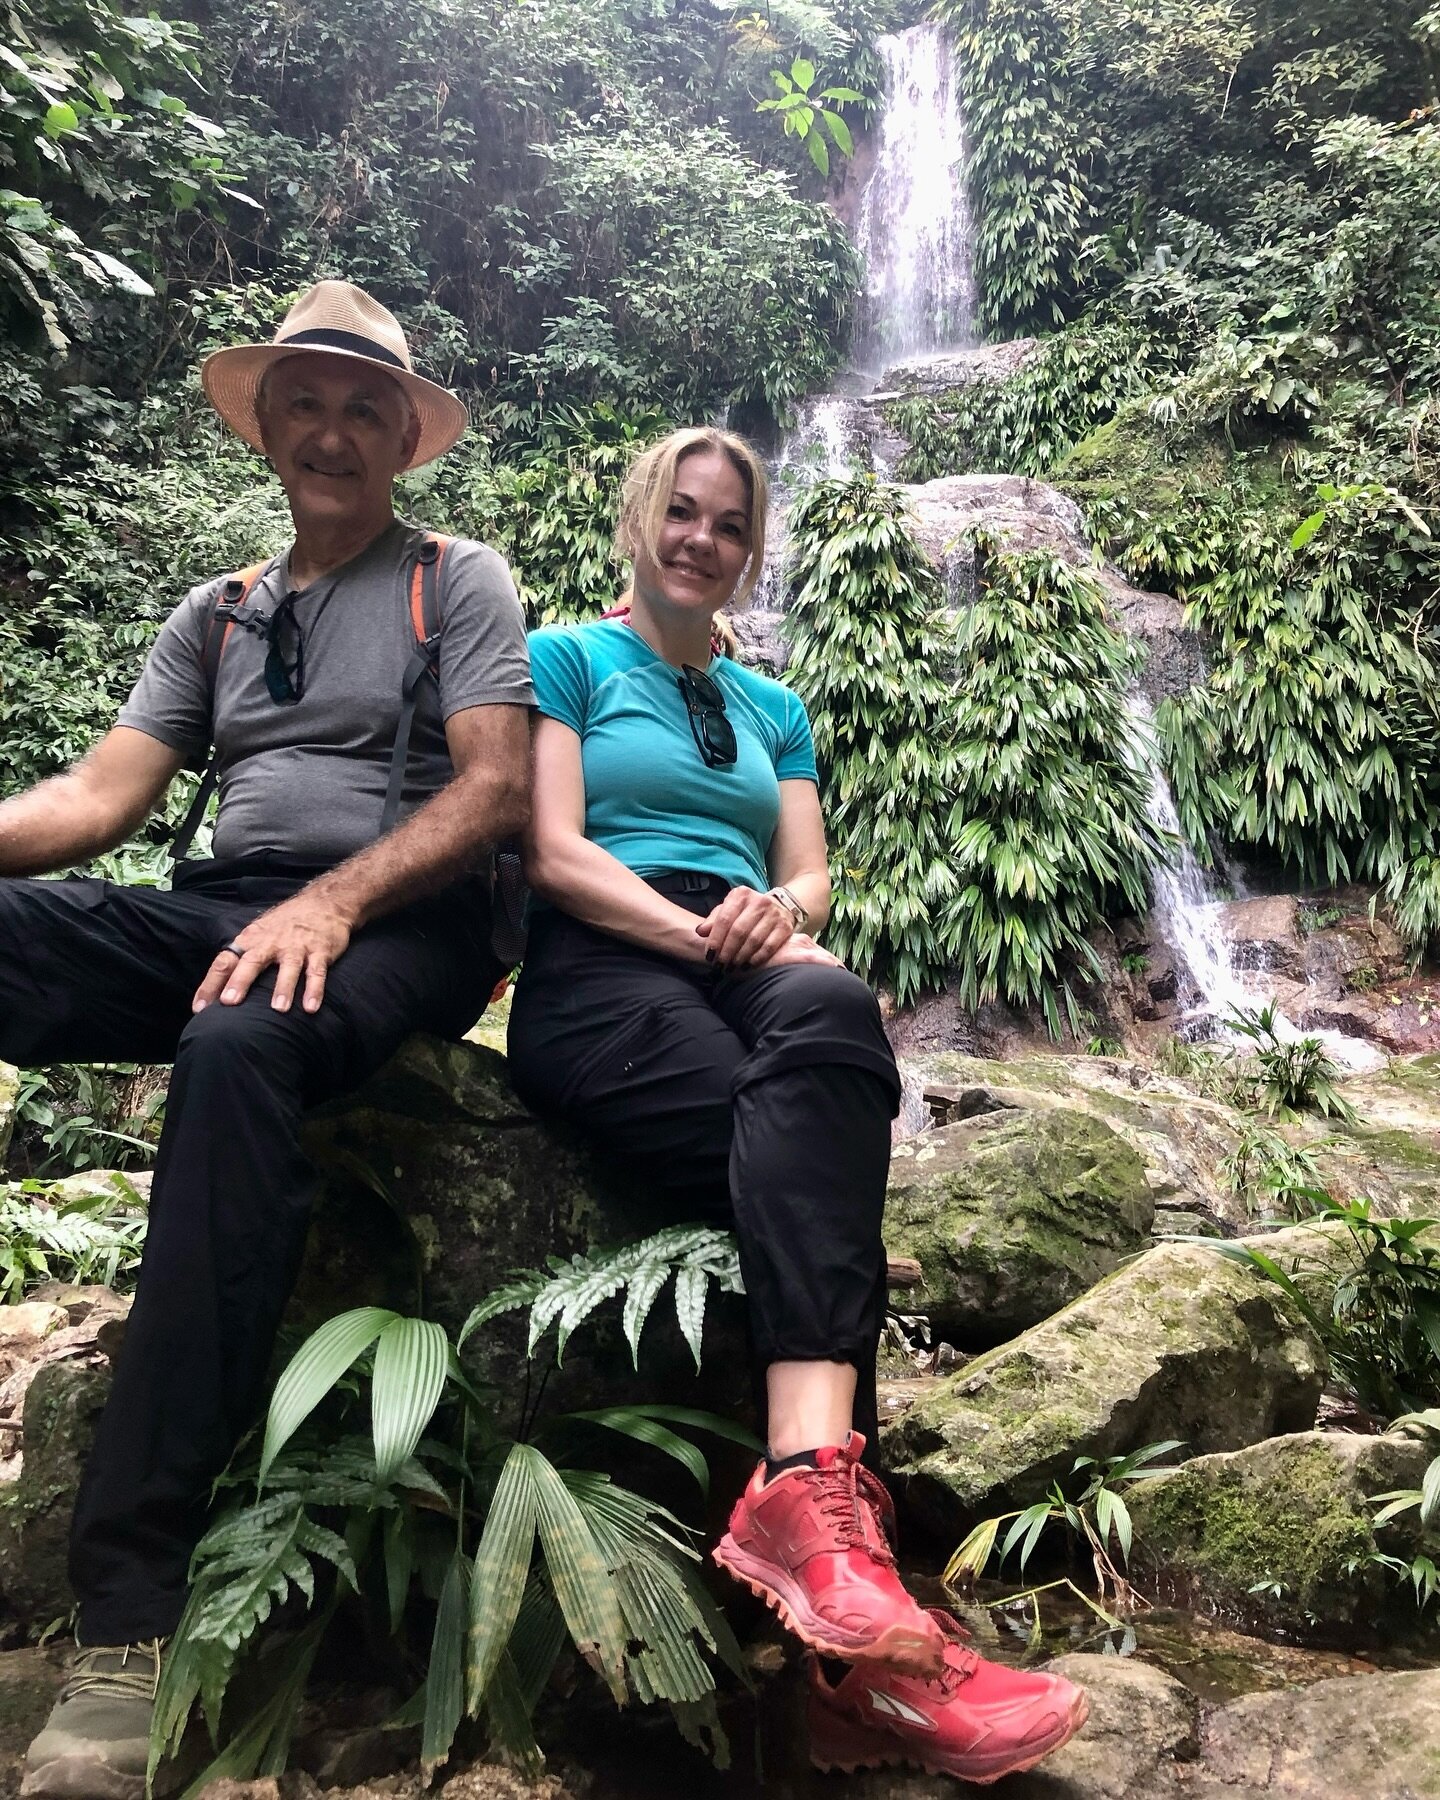 Exploring waterfalls in the National Park. HONDURAS
#travel #travelphotography #jungle #waterfallhotelhonduras #rainforest #photooftheday #wanderlust #hondurasfivestars #hondurastravel #allinclusive #beautifuldestinations #travelgram #instatravel